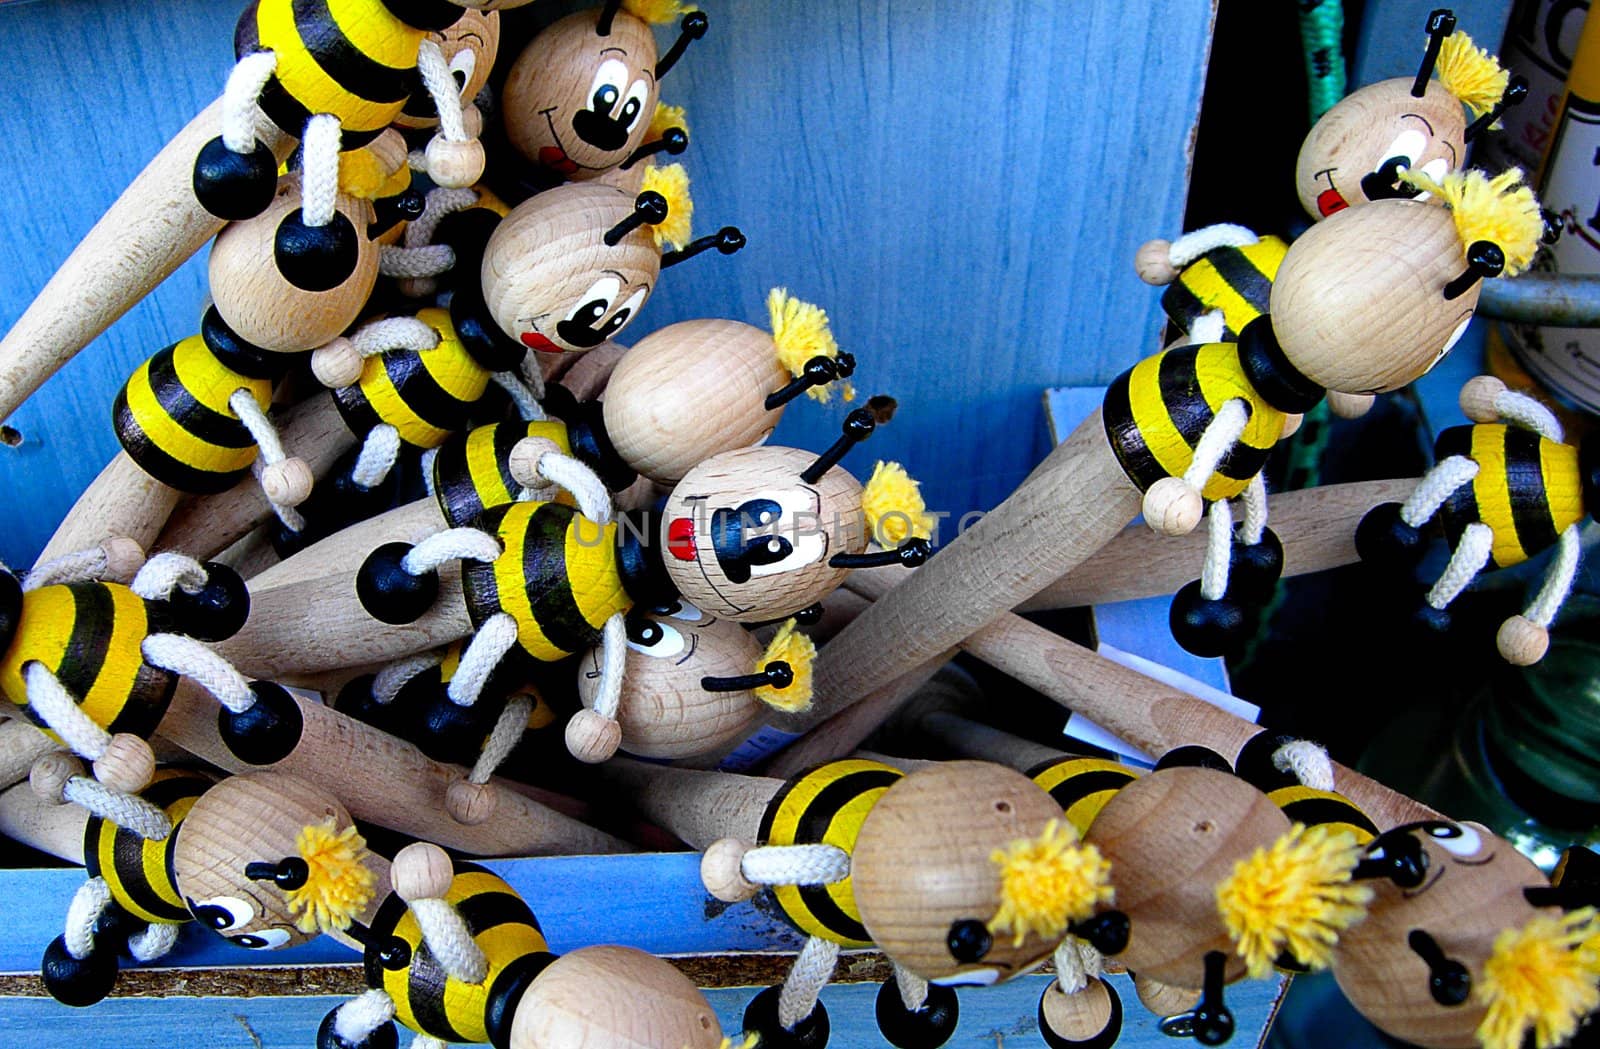 Souvenir Bees in Hungary Shop